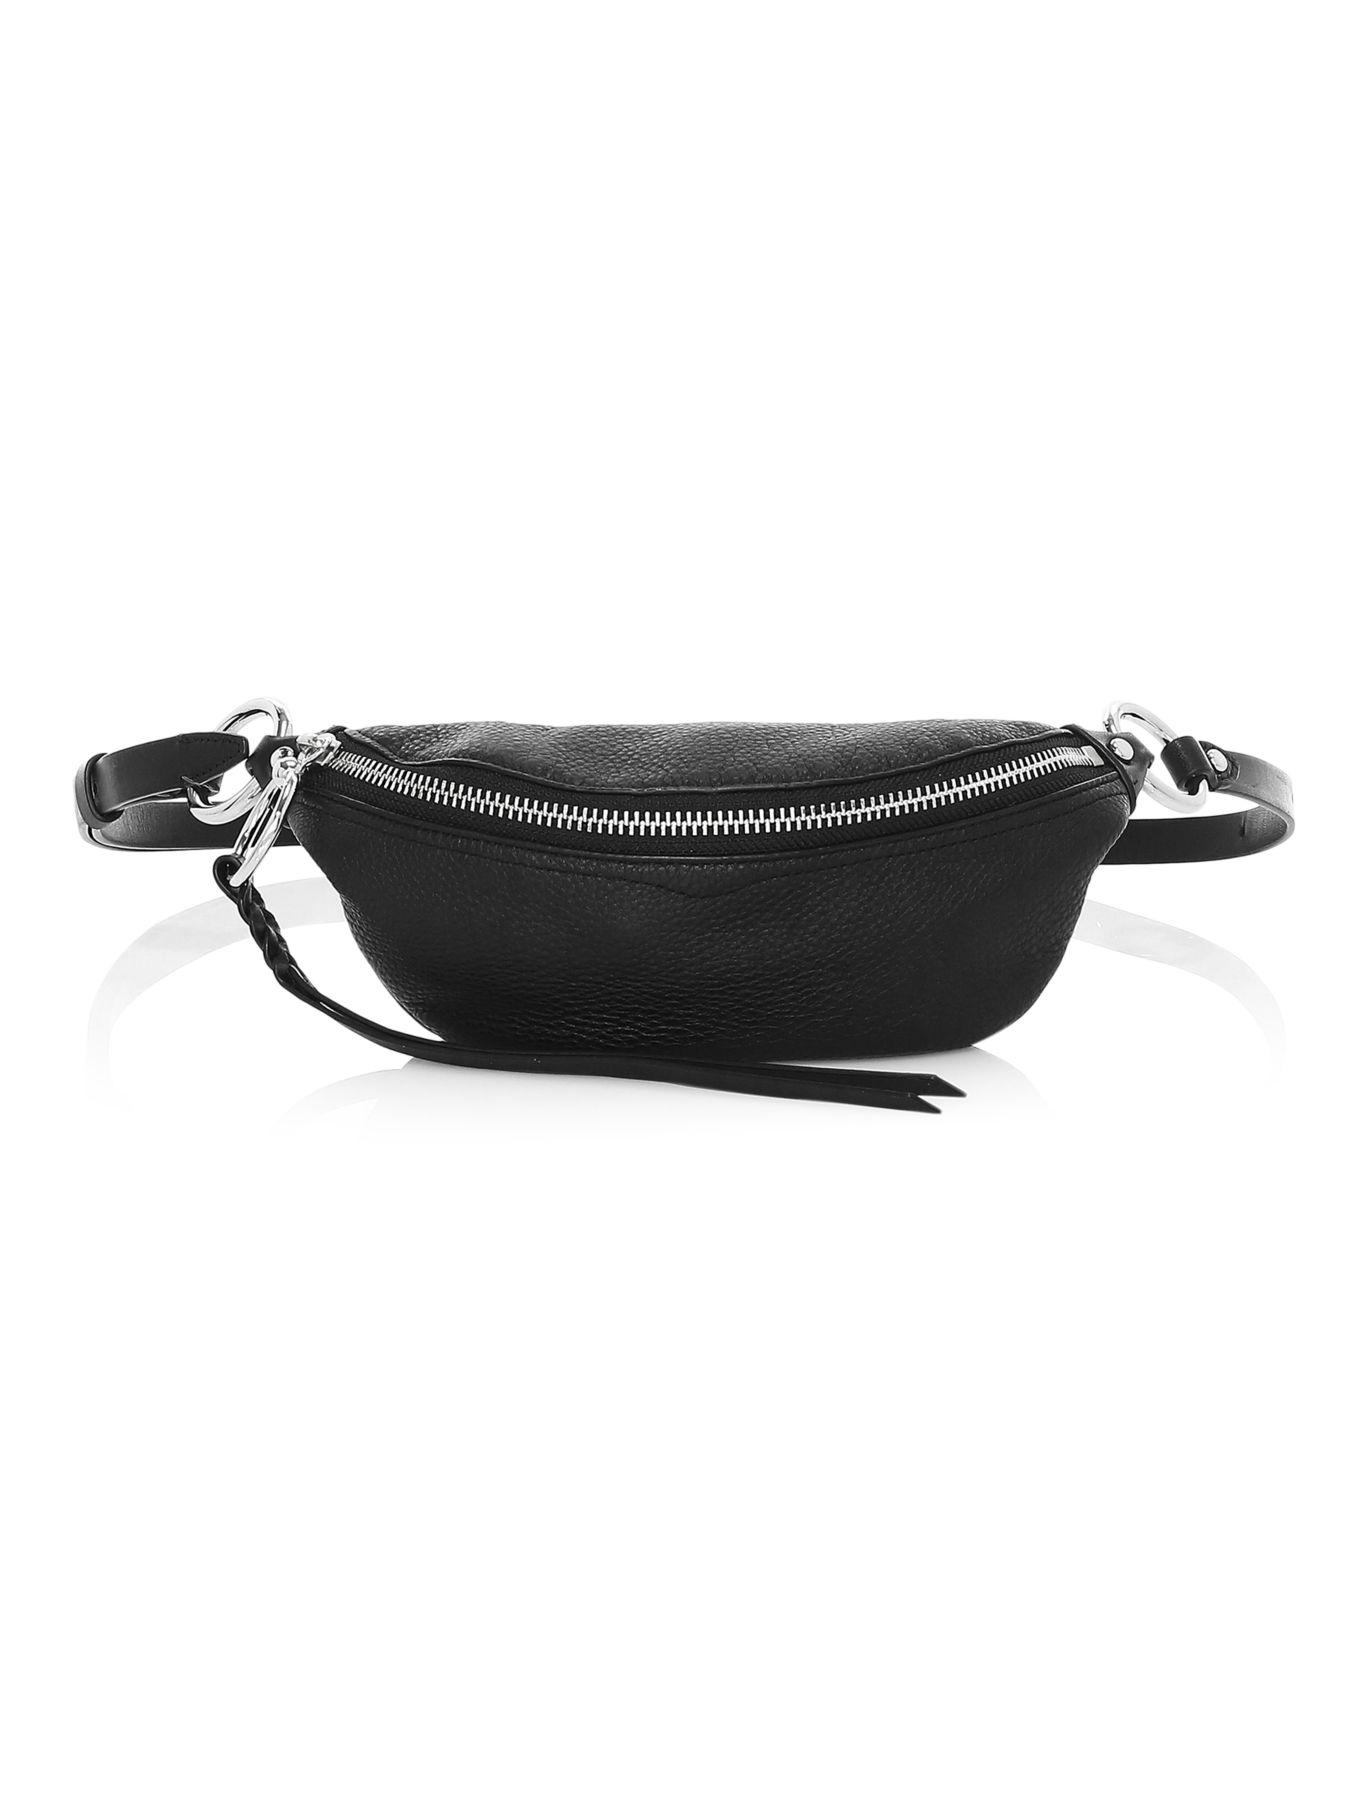 Rebecca Minkoff Bree Mini Leather Belt Bag in Black/Silver (Black ...